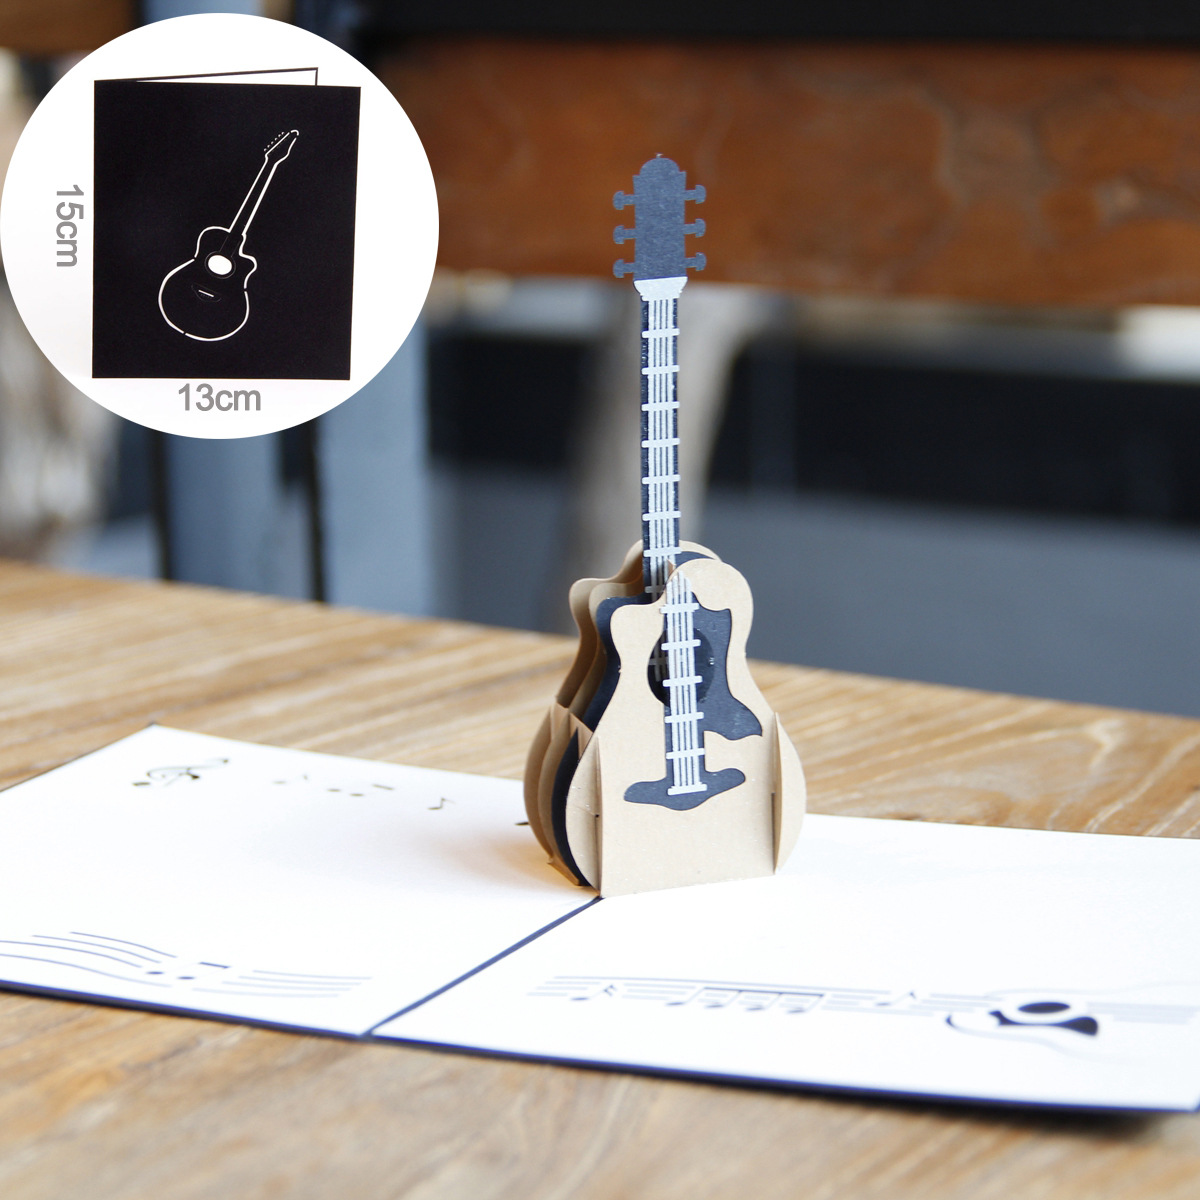 3D Guitar foldable card